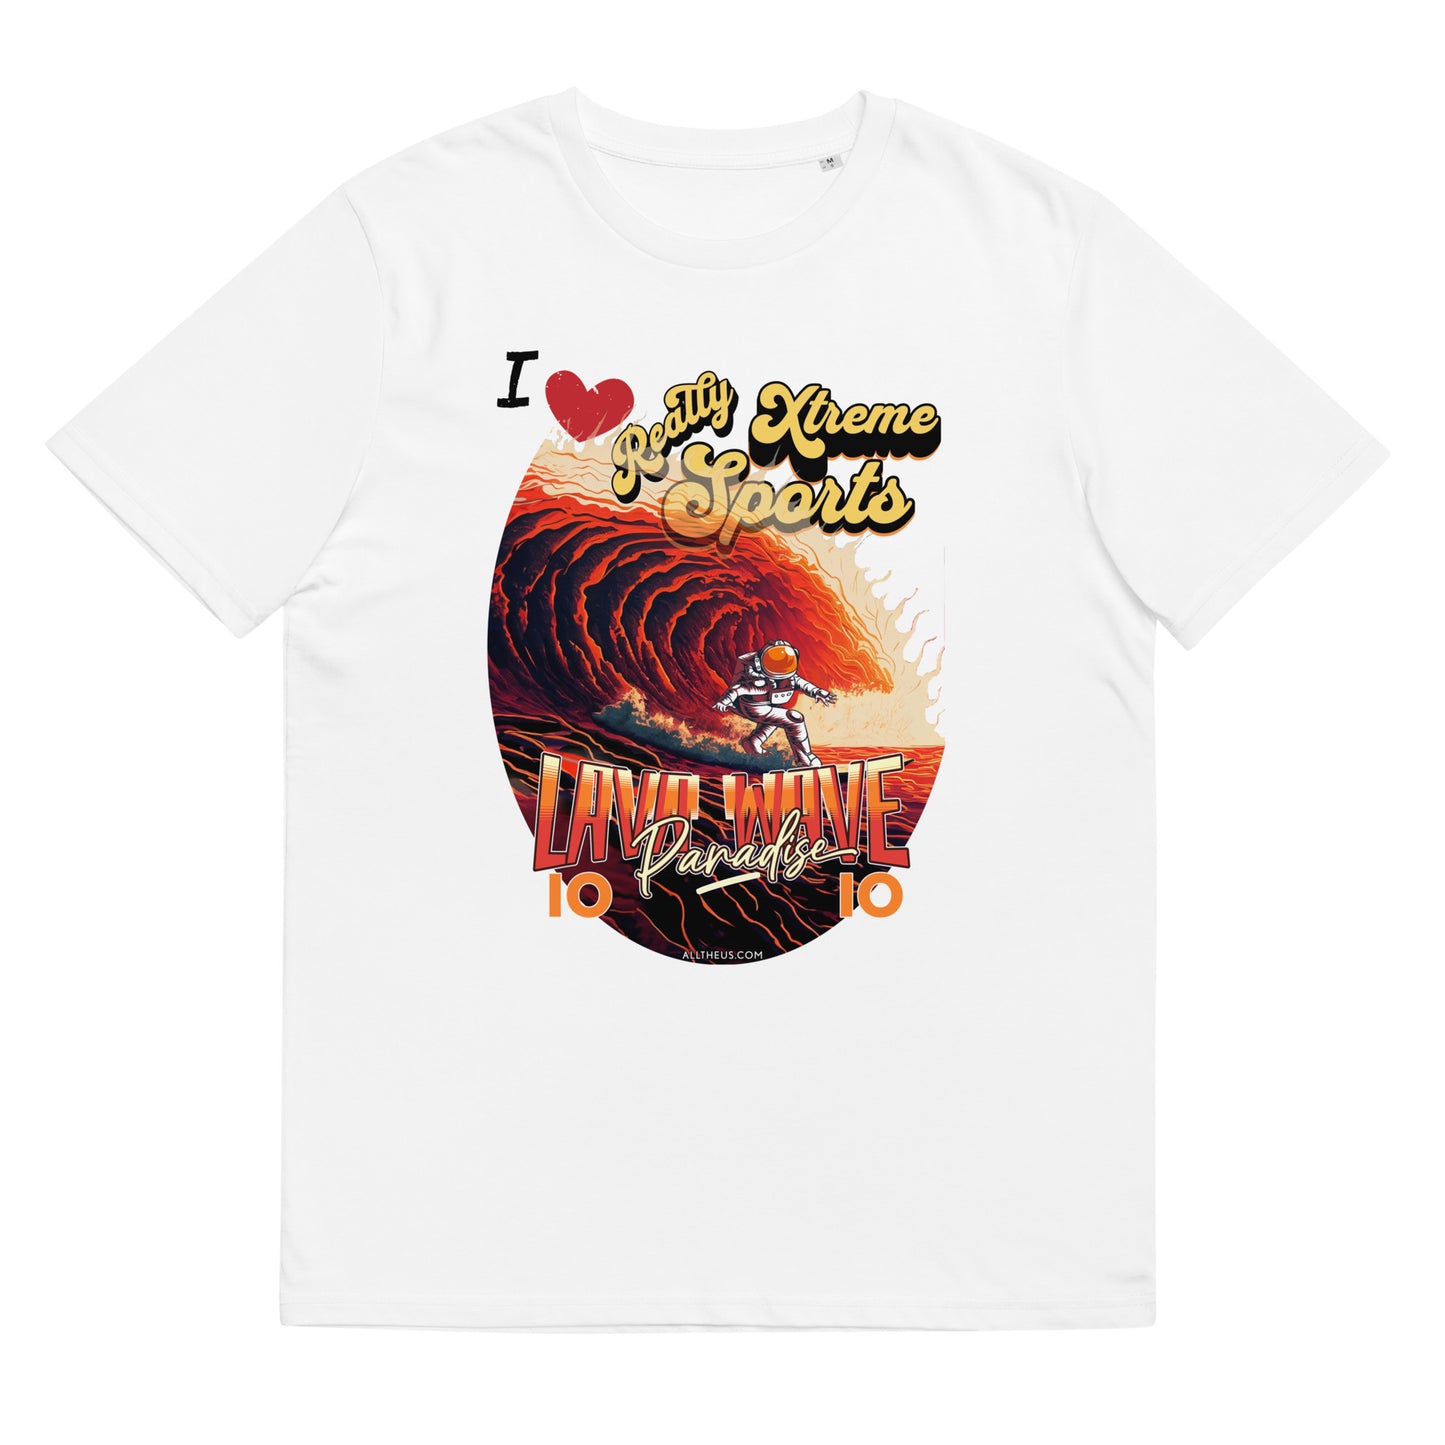 Unisex organic cotton tshirt - I Love Extreme Sport, Lava Surfing on Io.